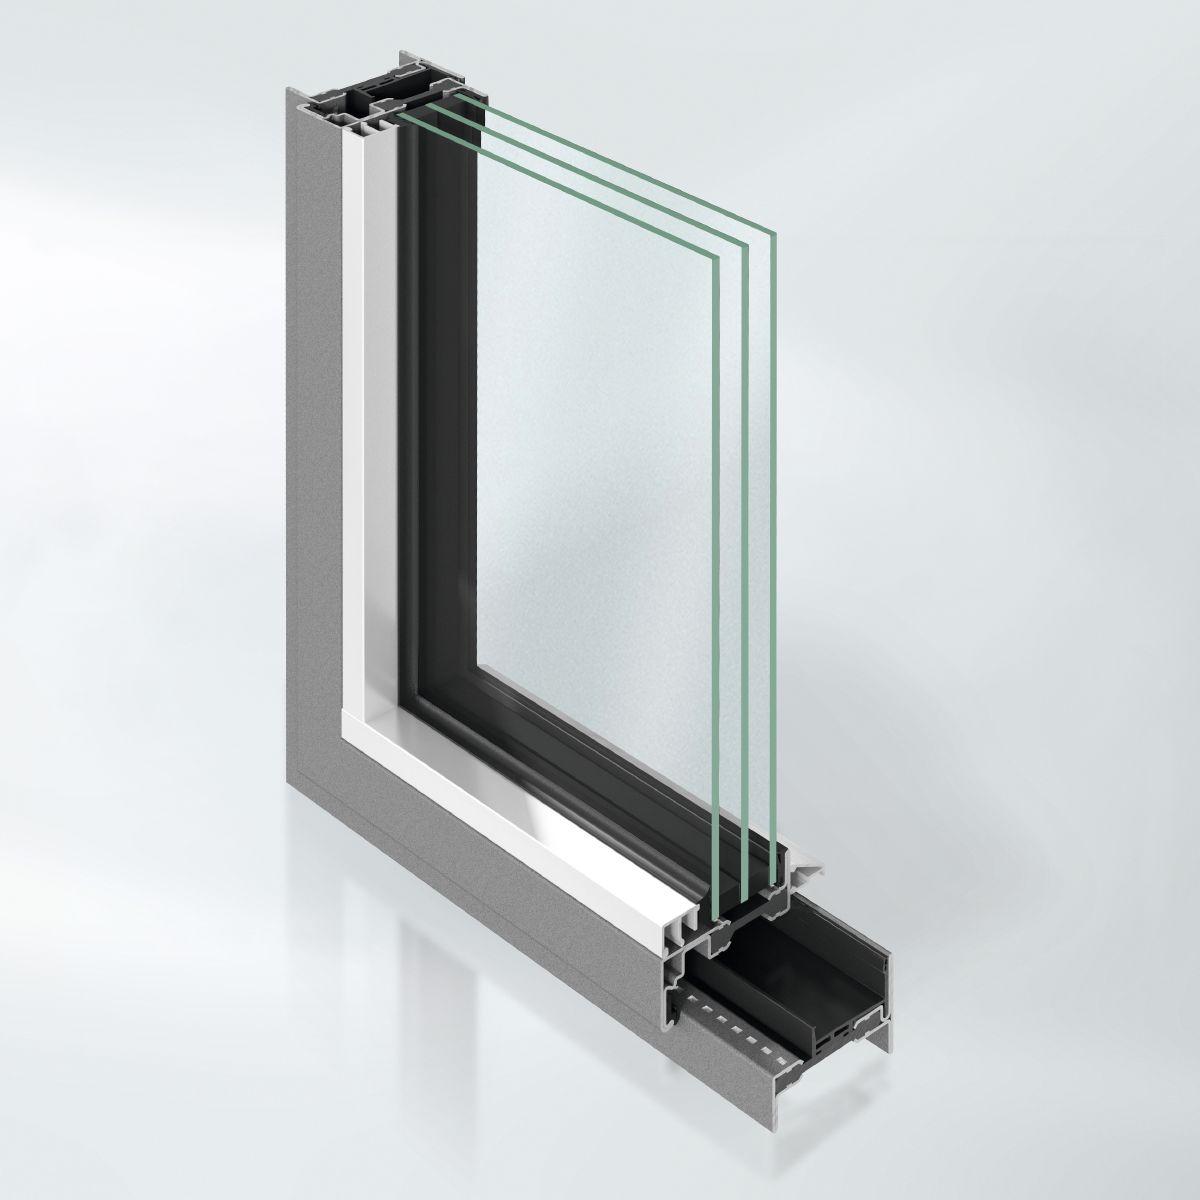 Janisol Window System Arte 66